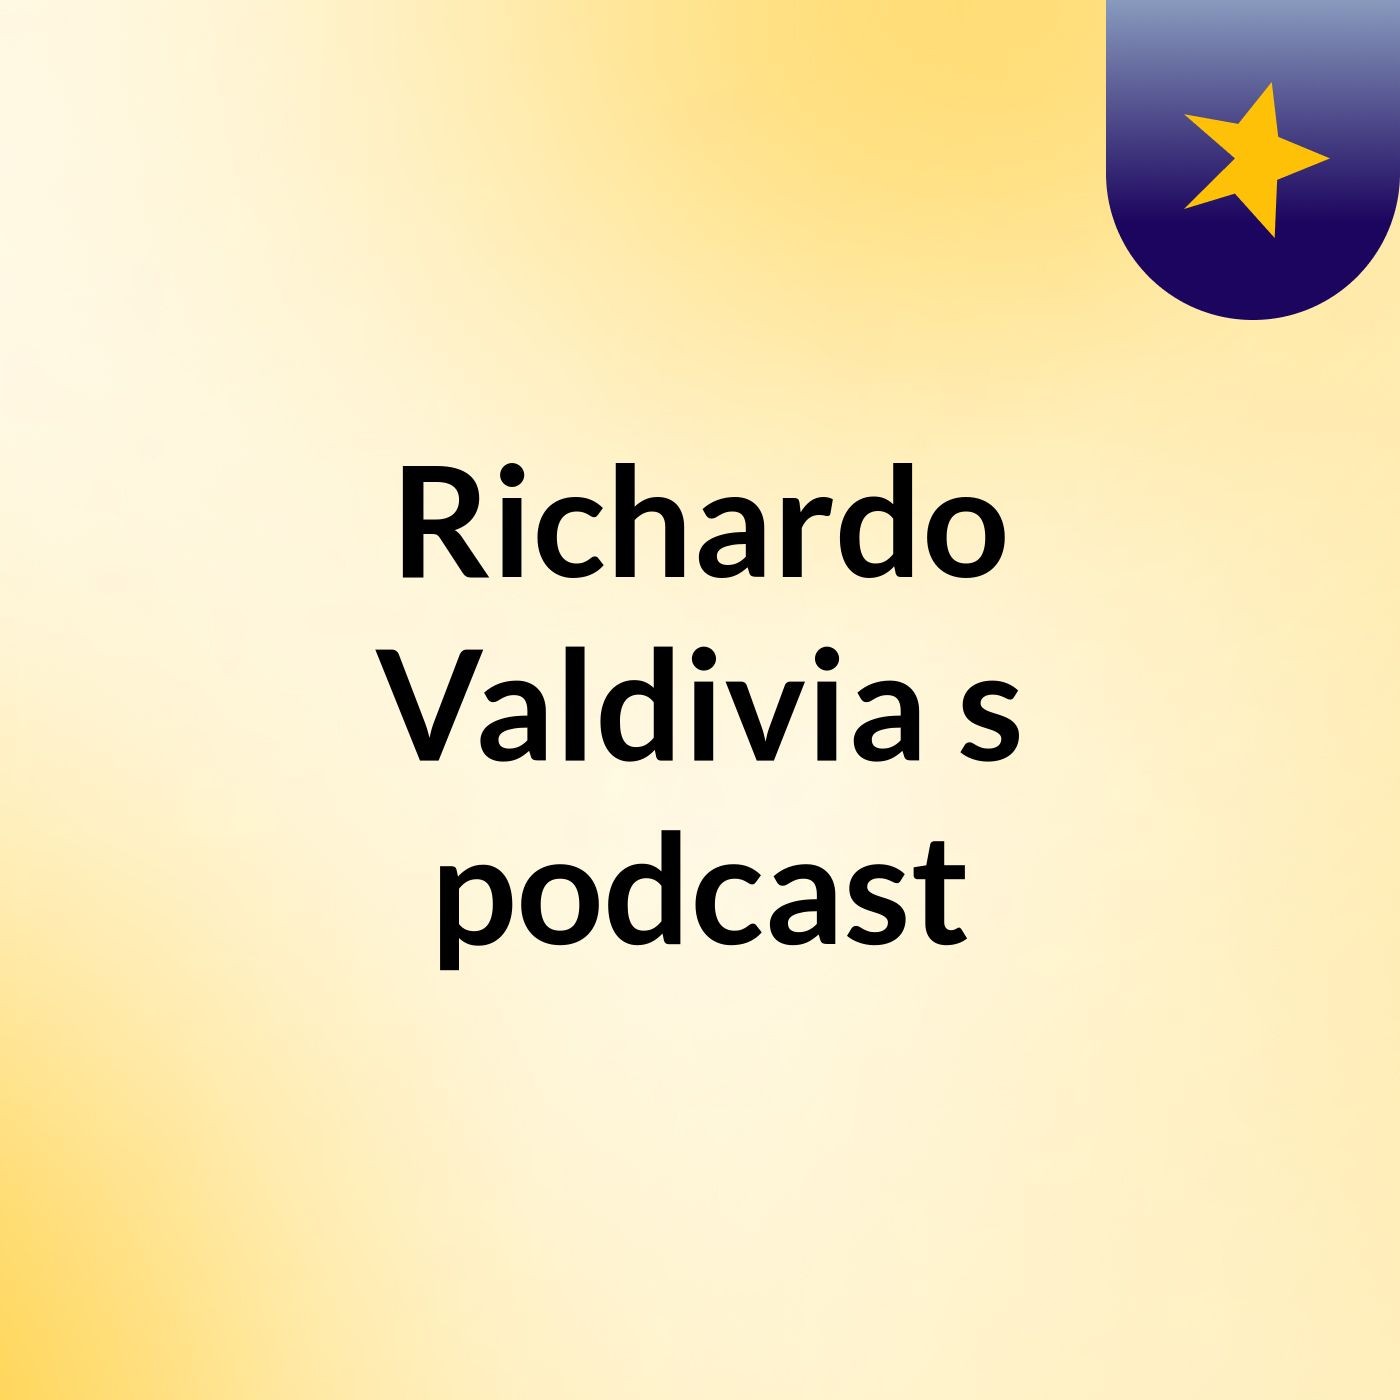 Richardo Valdivia's podcast